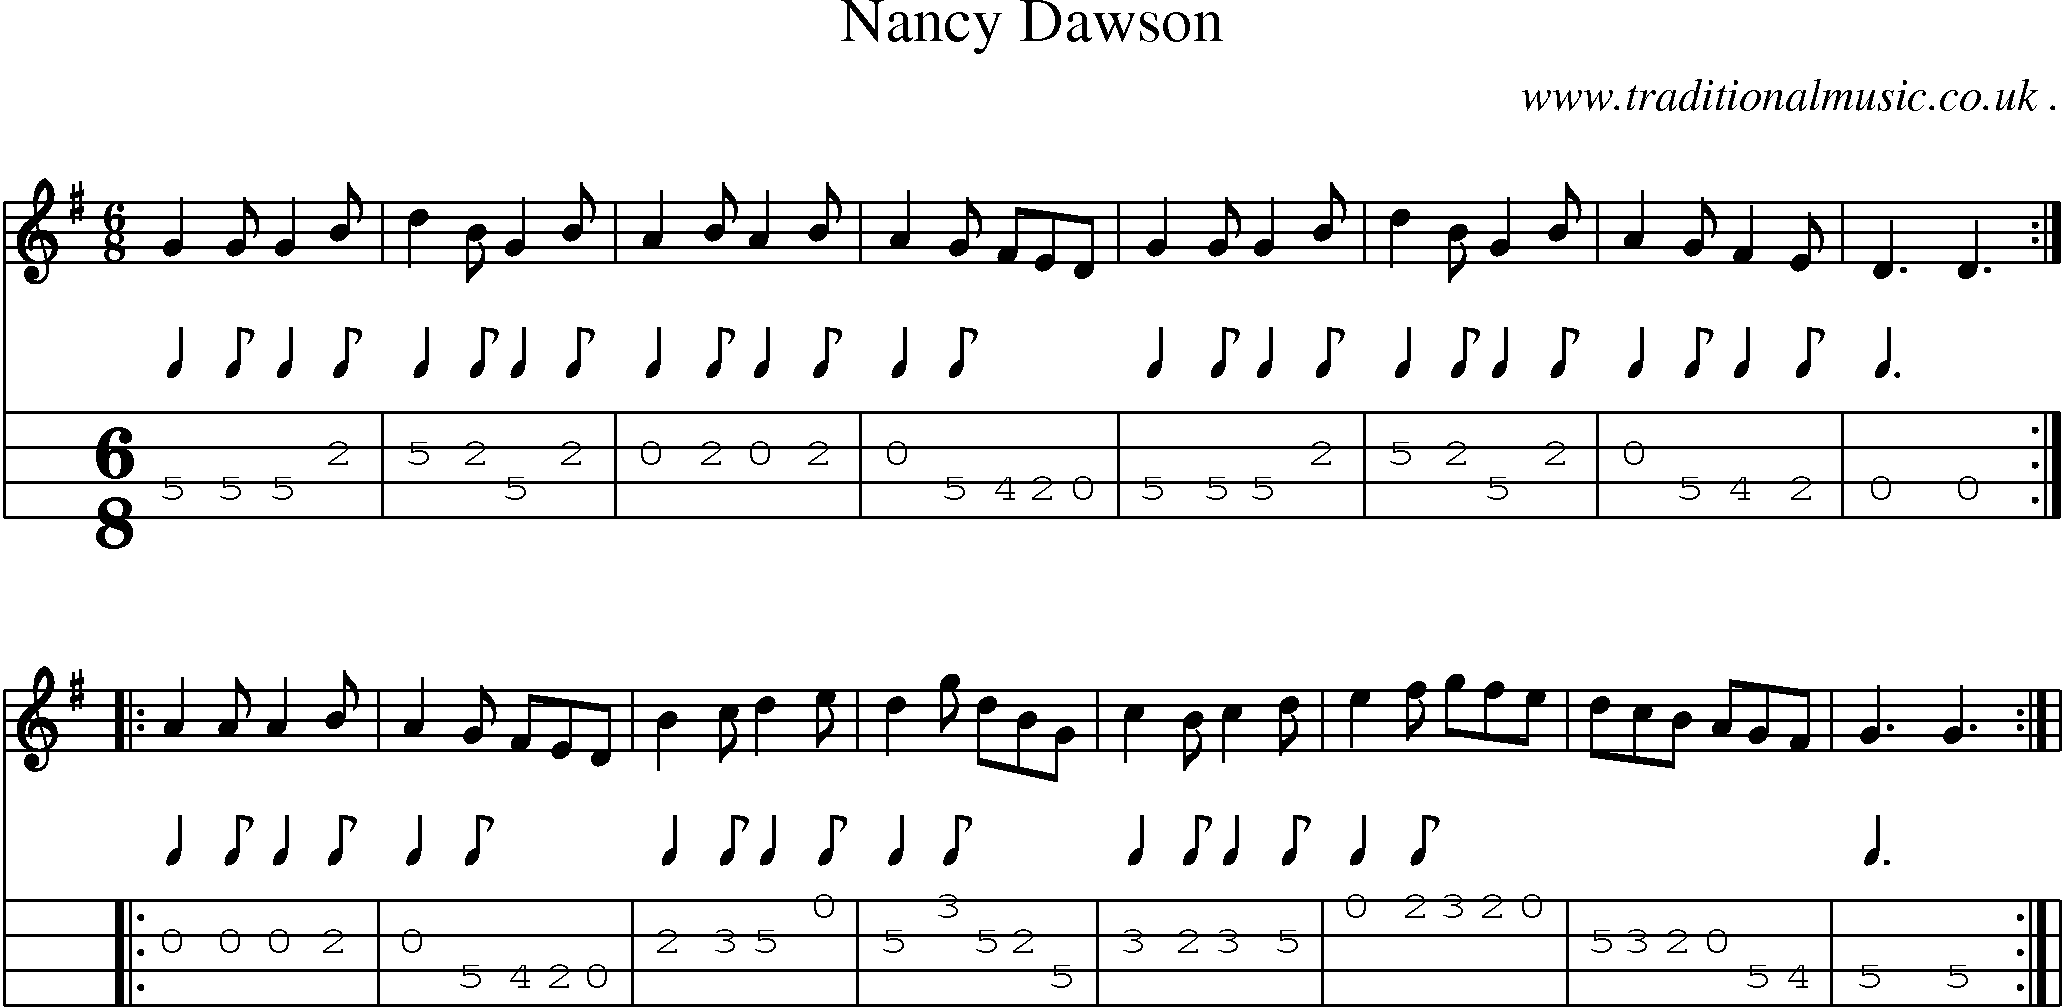 Sheet-Music and Mandolin Tabs for Nancy Dawson